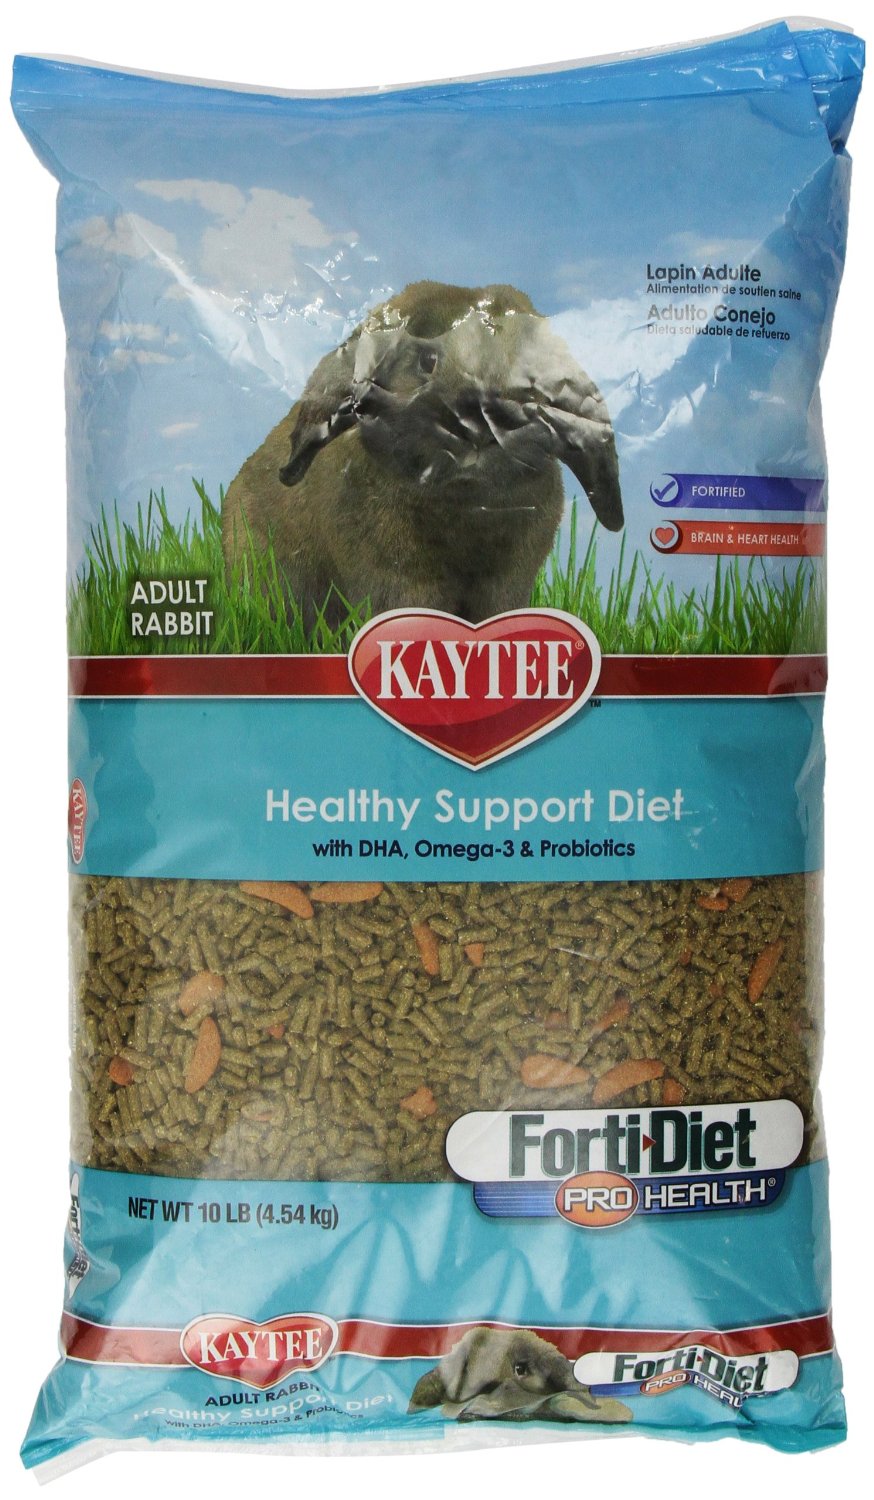 Kaytee Forti Diet Pro Health Food for Adult Rabbit,  10 lbs.